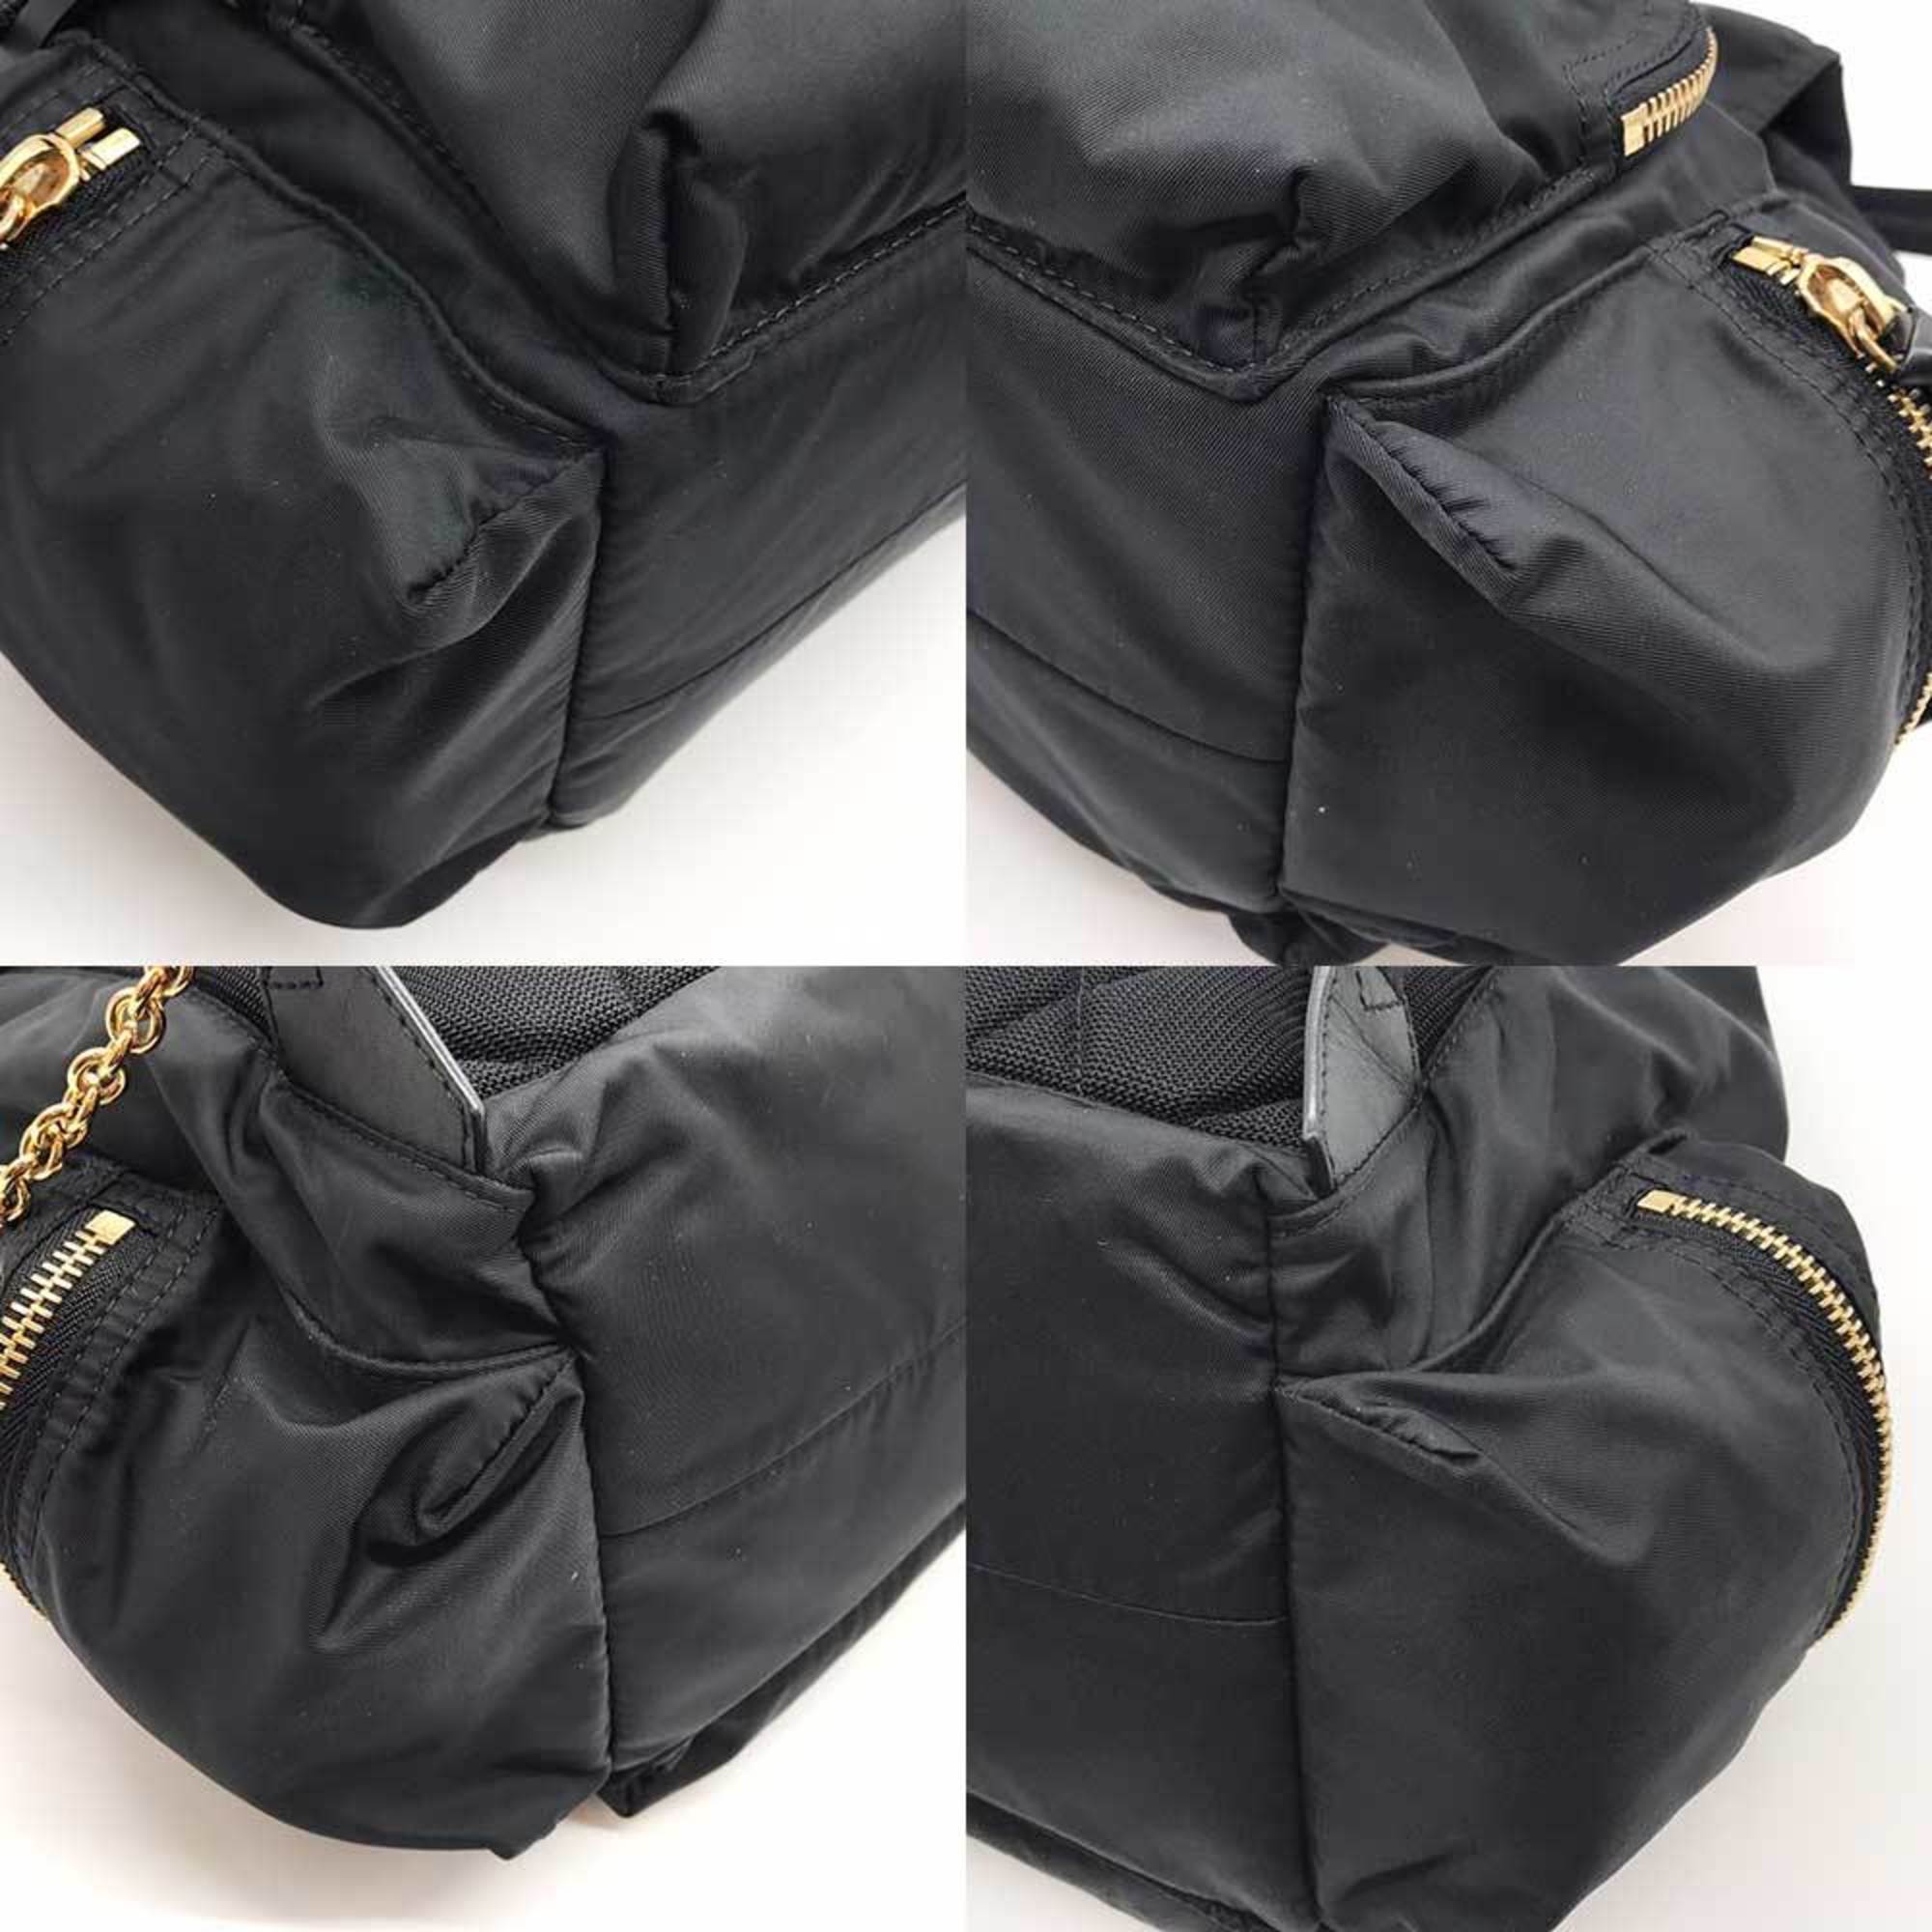 Burberry Rucksack Backpack Black Nylon Leather 4016622 BURBERRY